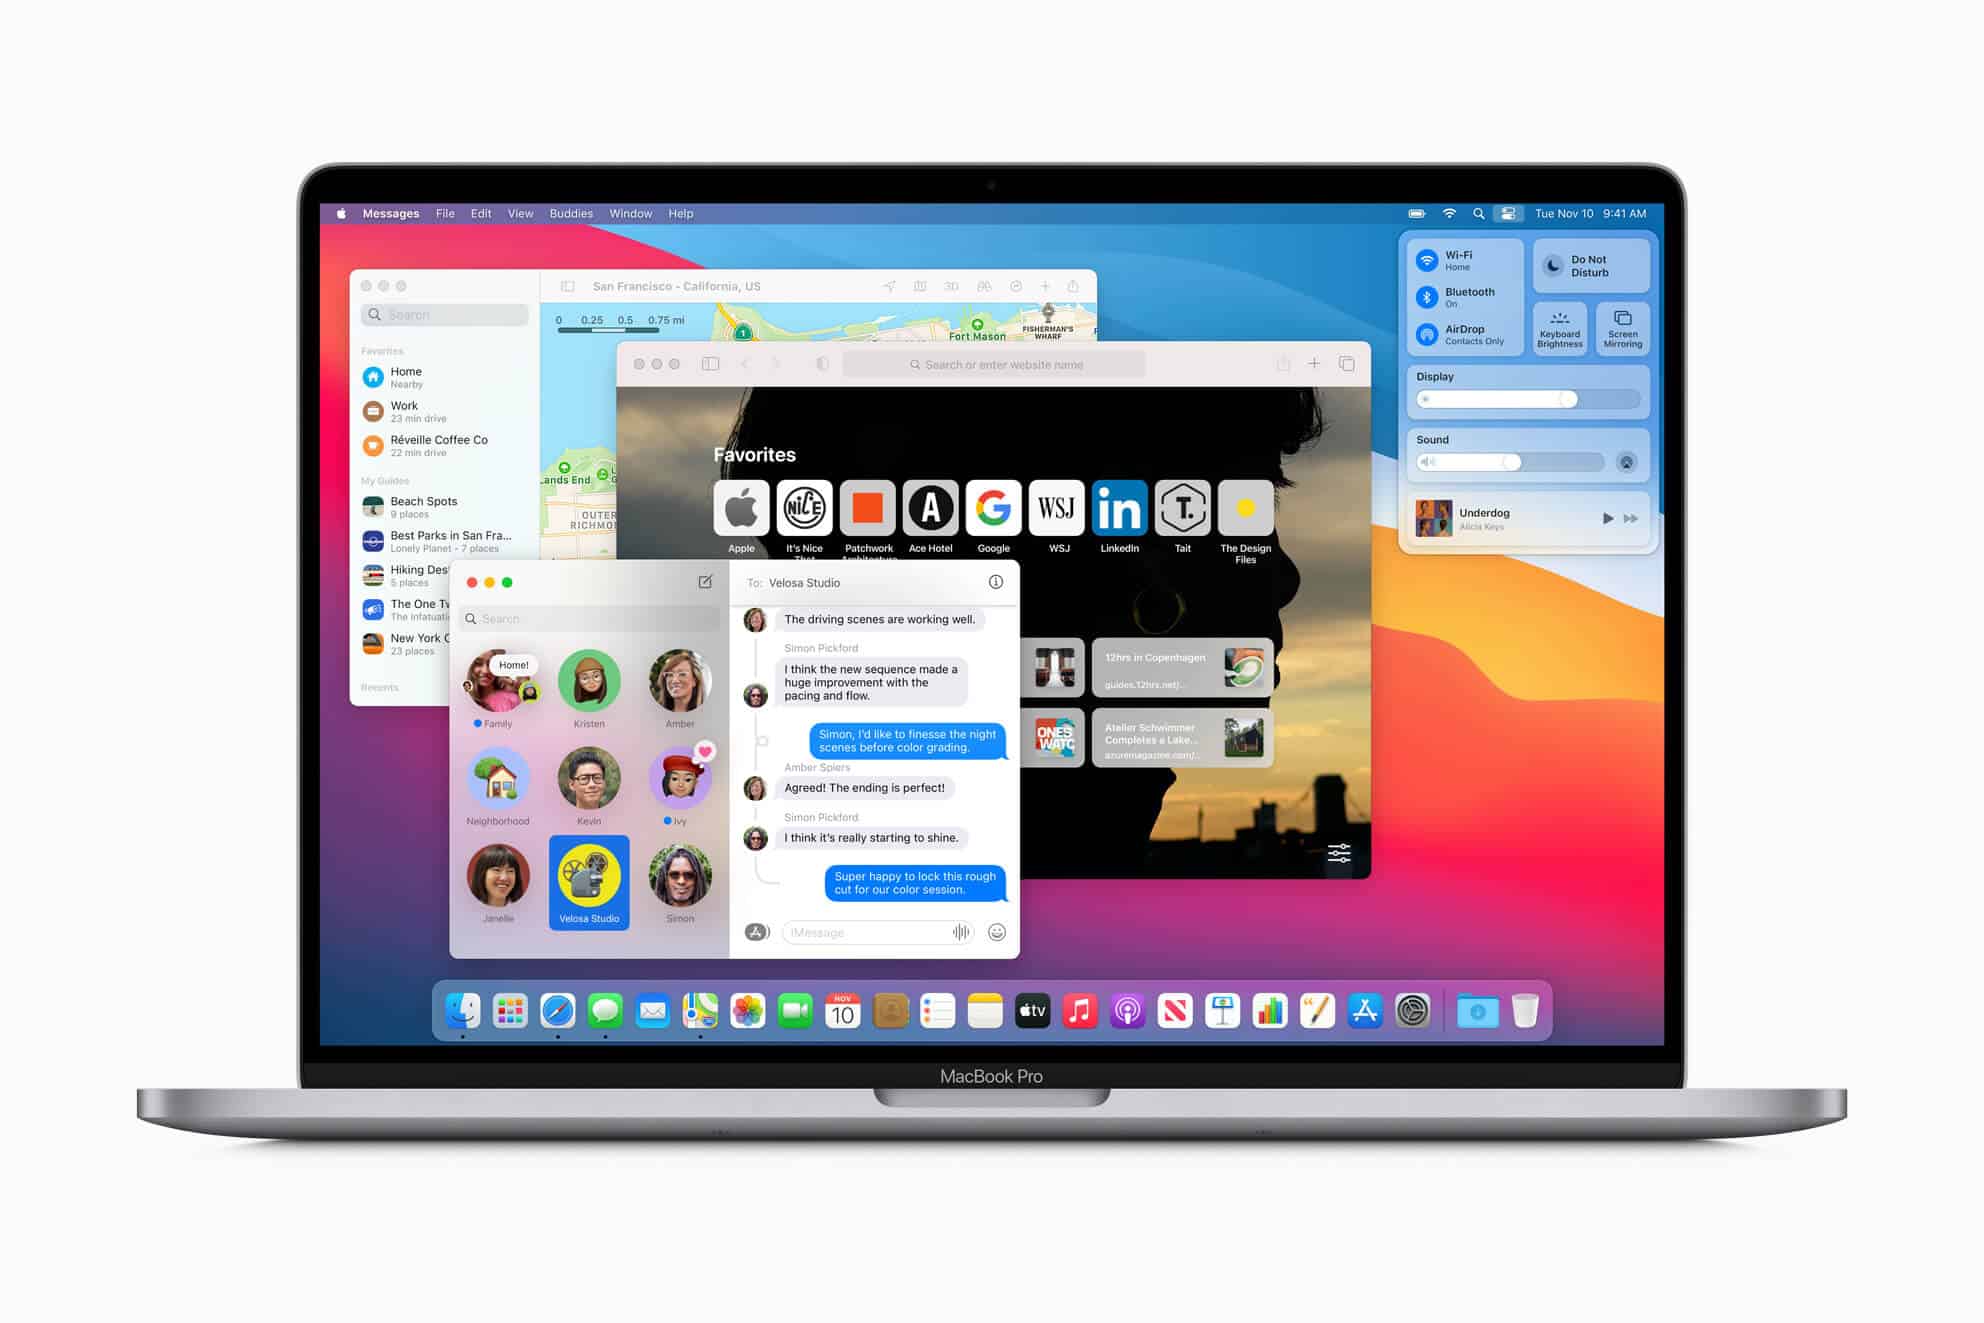 macOS Big Sur new features